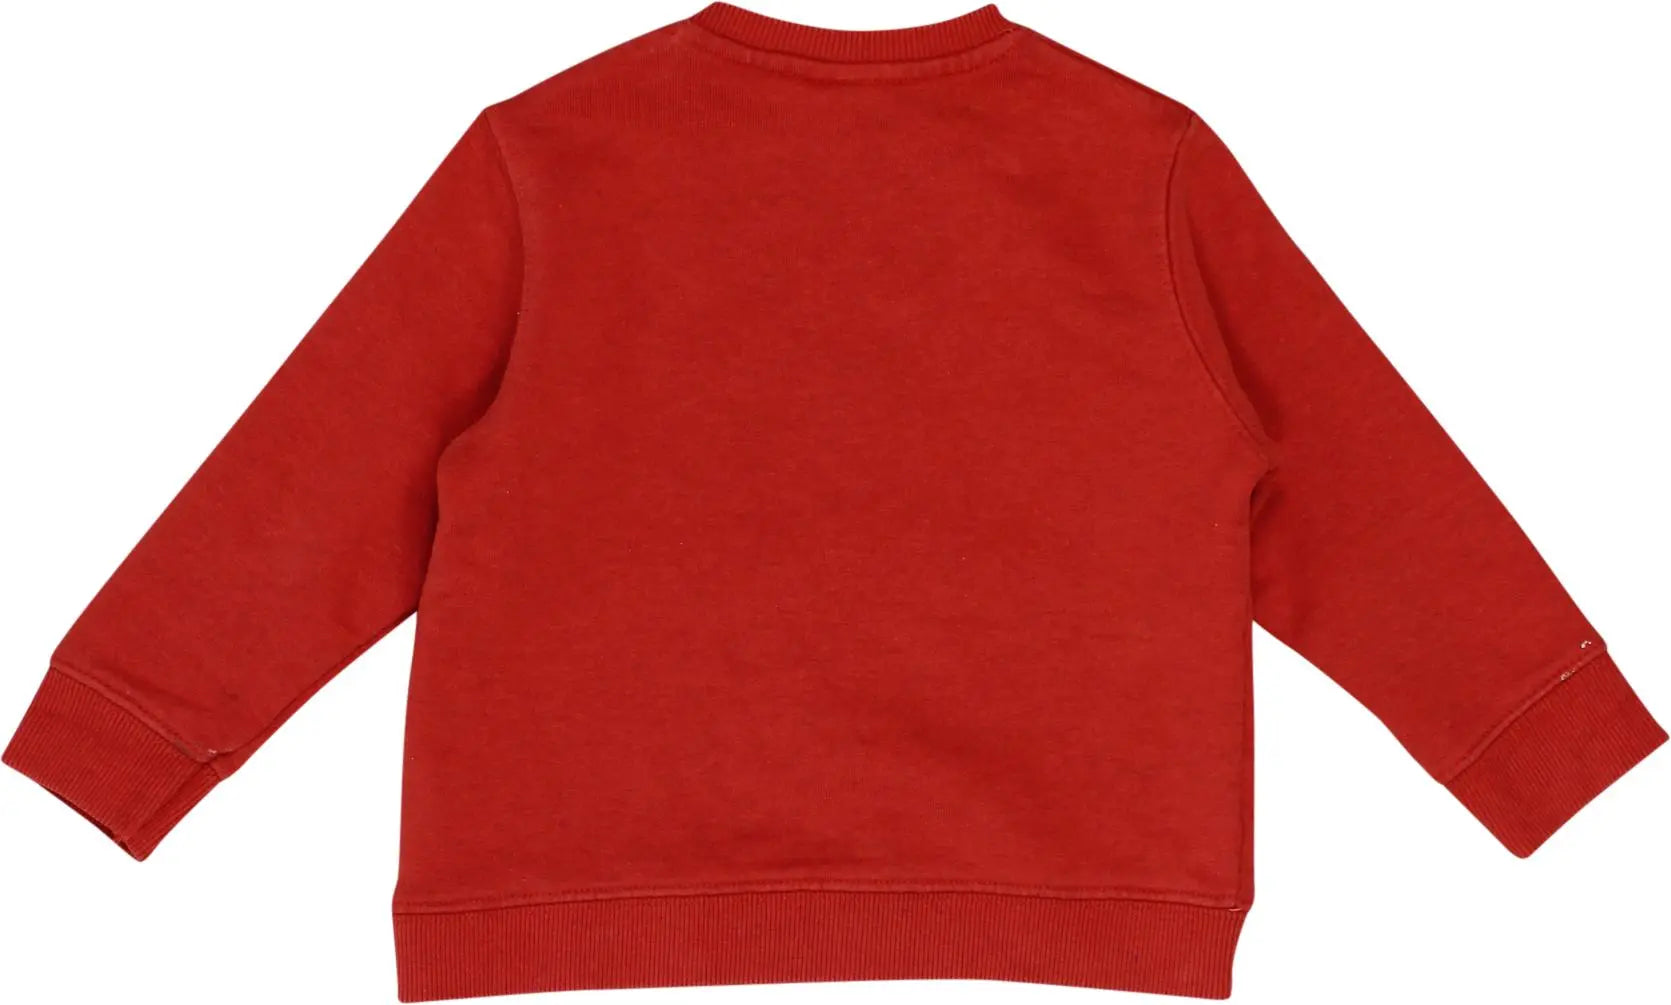 Zara - Sweatshirt- ThriftTale.com - Vintage and second handclothing